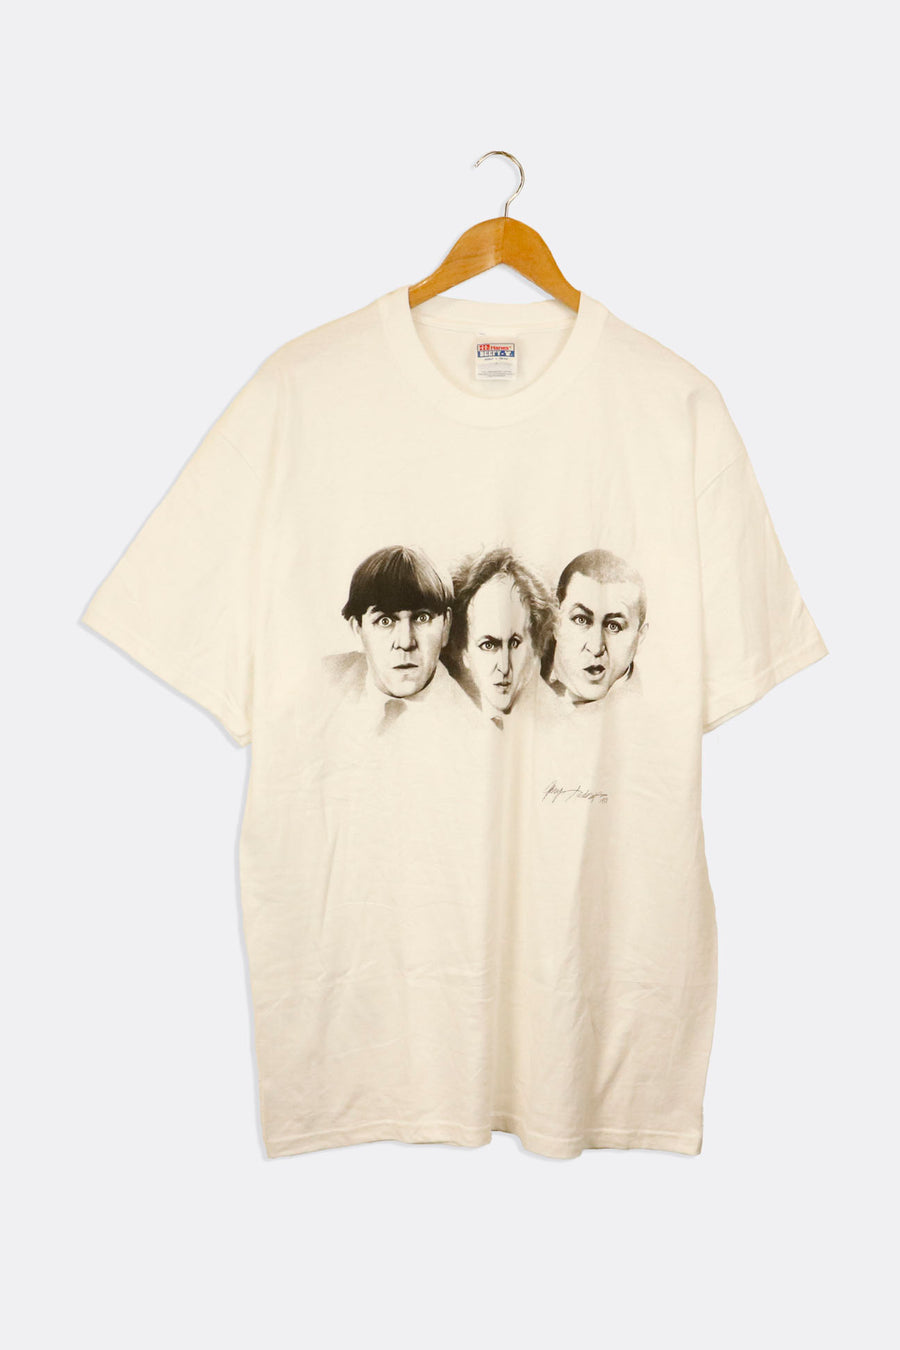 Vintage 1988 Three Stooges Surprised Faces Graphic T Shirt Sz L